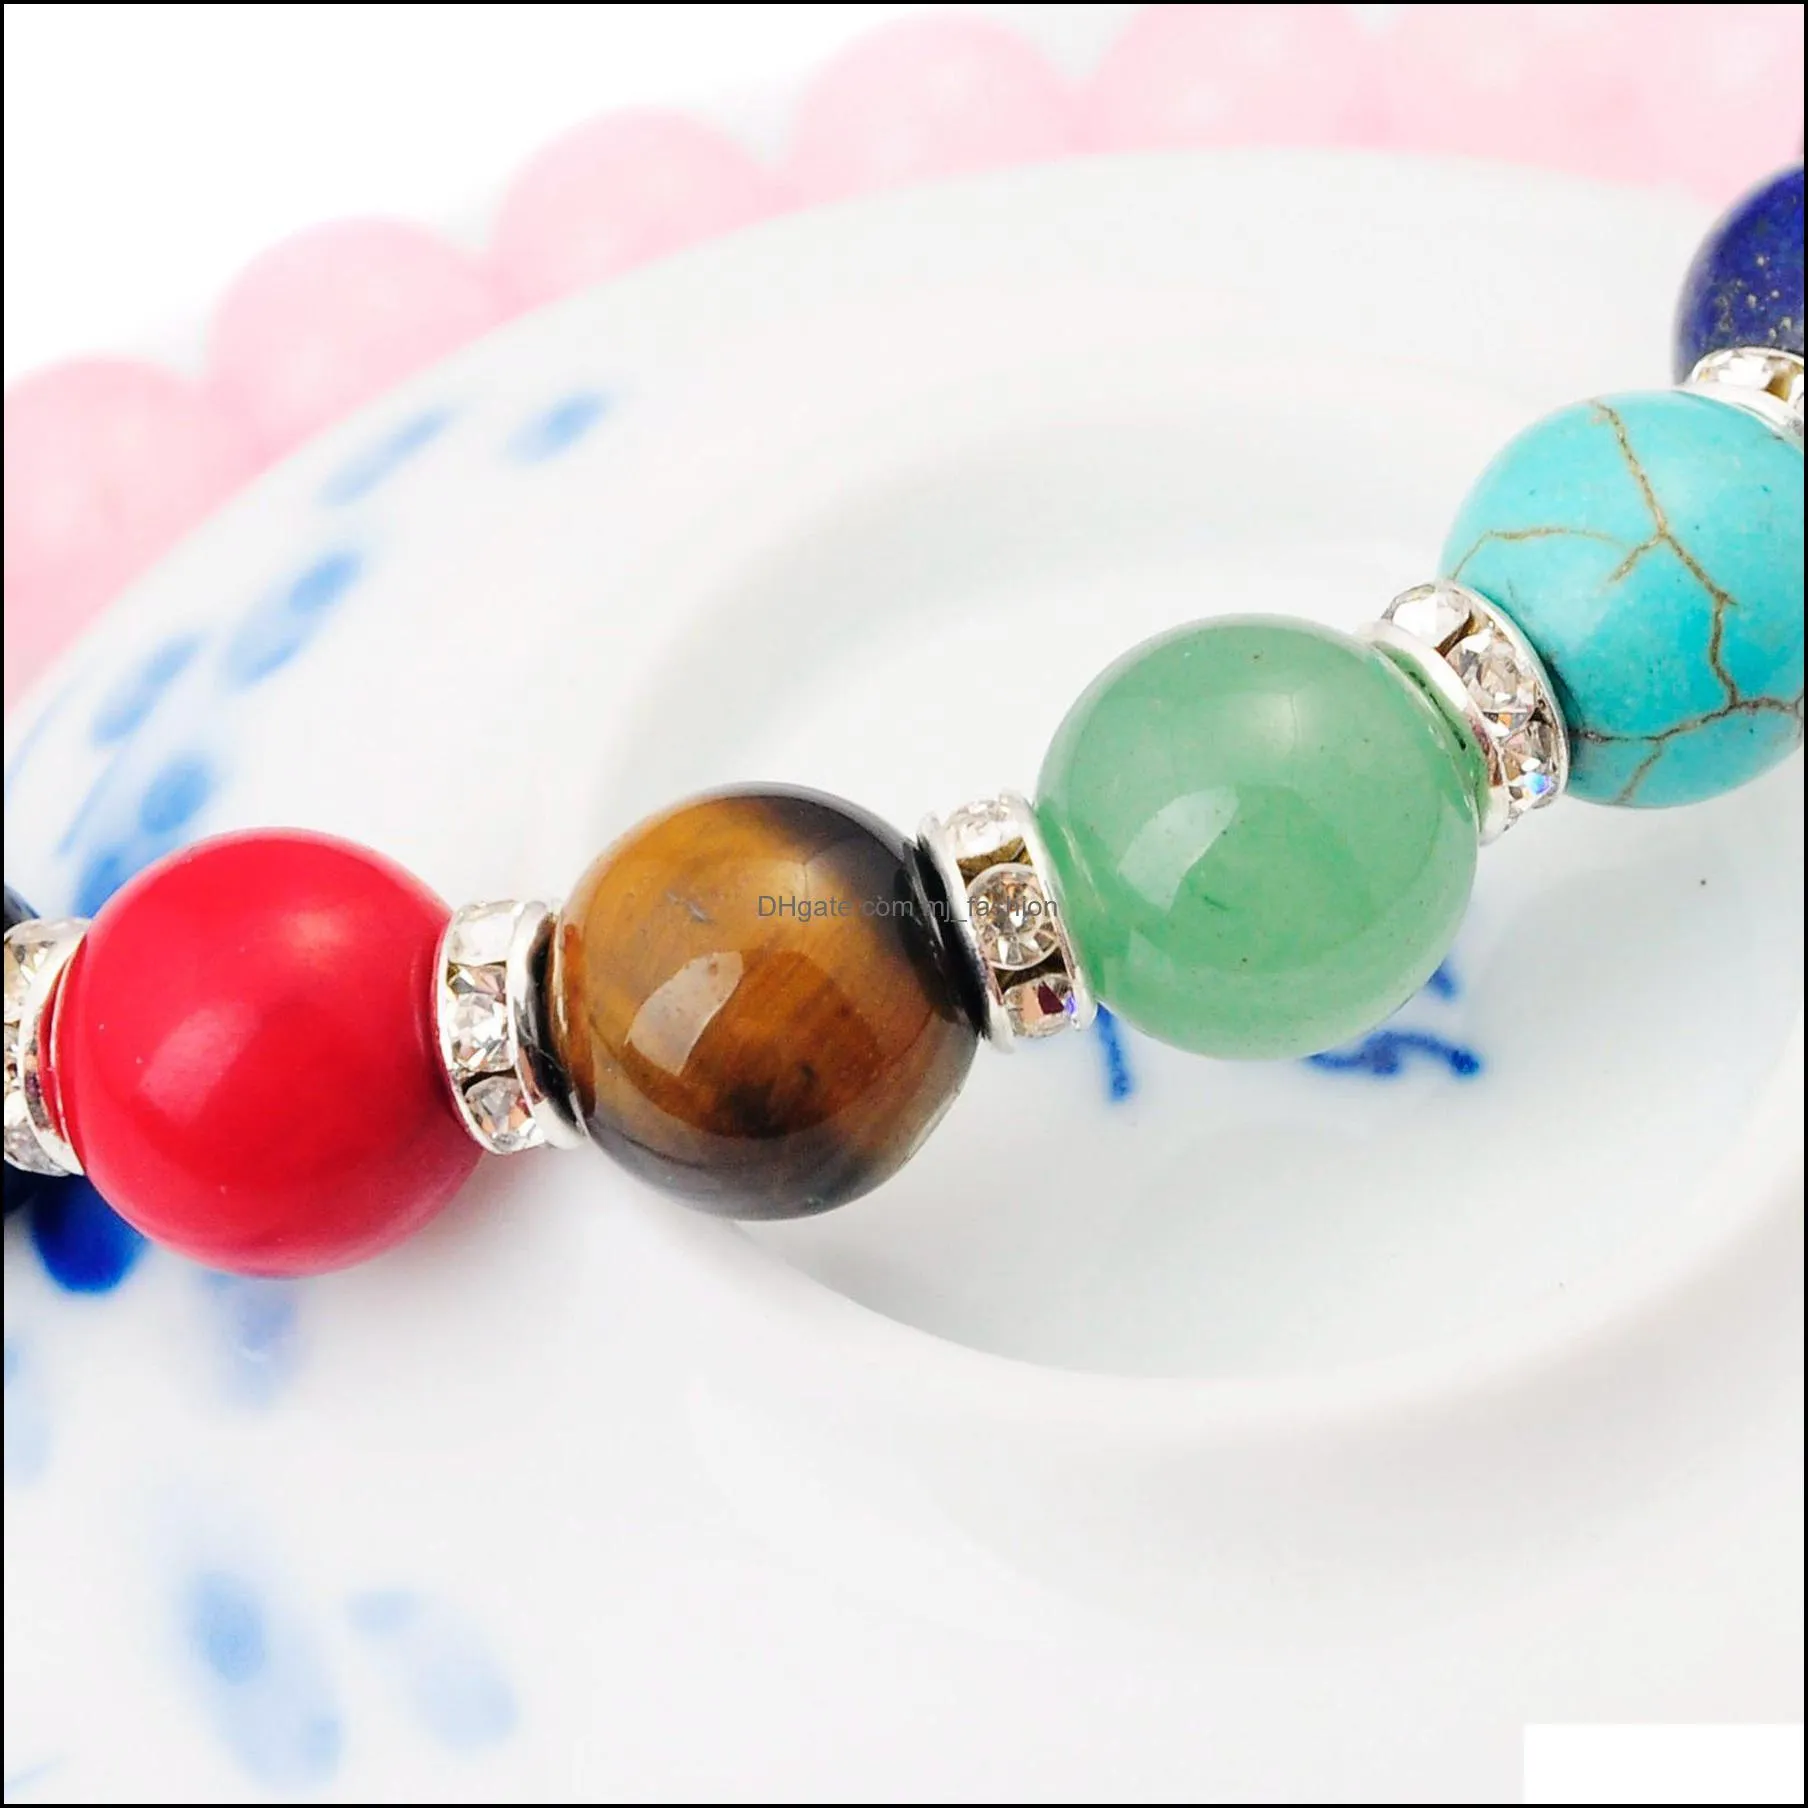 joya gift 14sb1037-8mm natural rose quartz beads bracelet 7 chakra gemstone crystal healing reiki women jewelry bangle free shipping